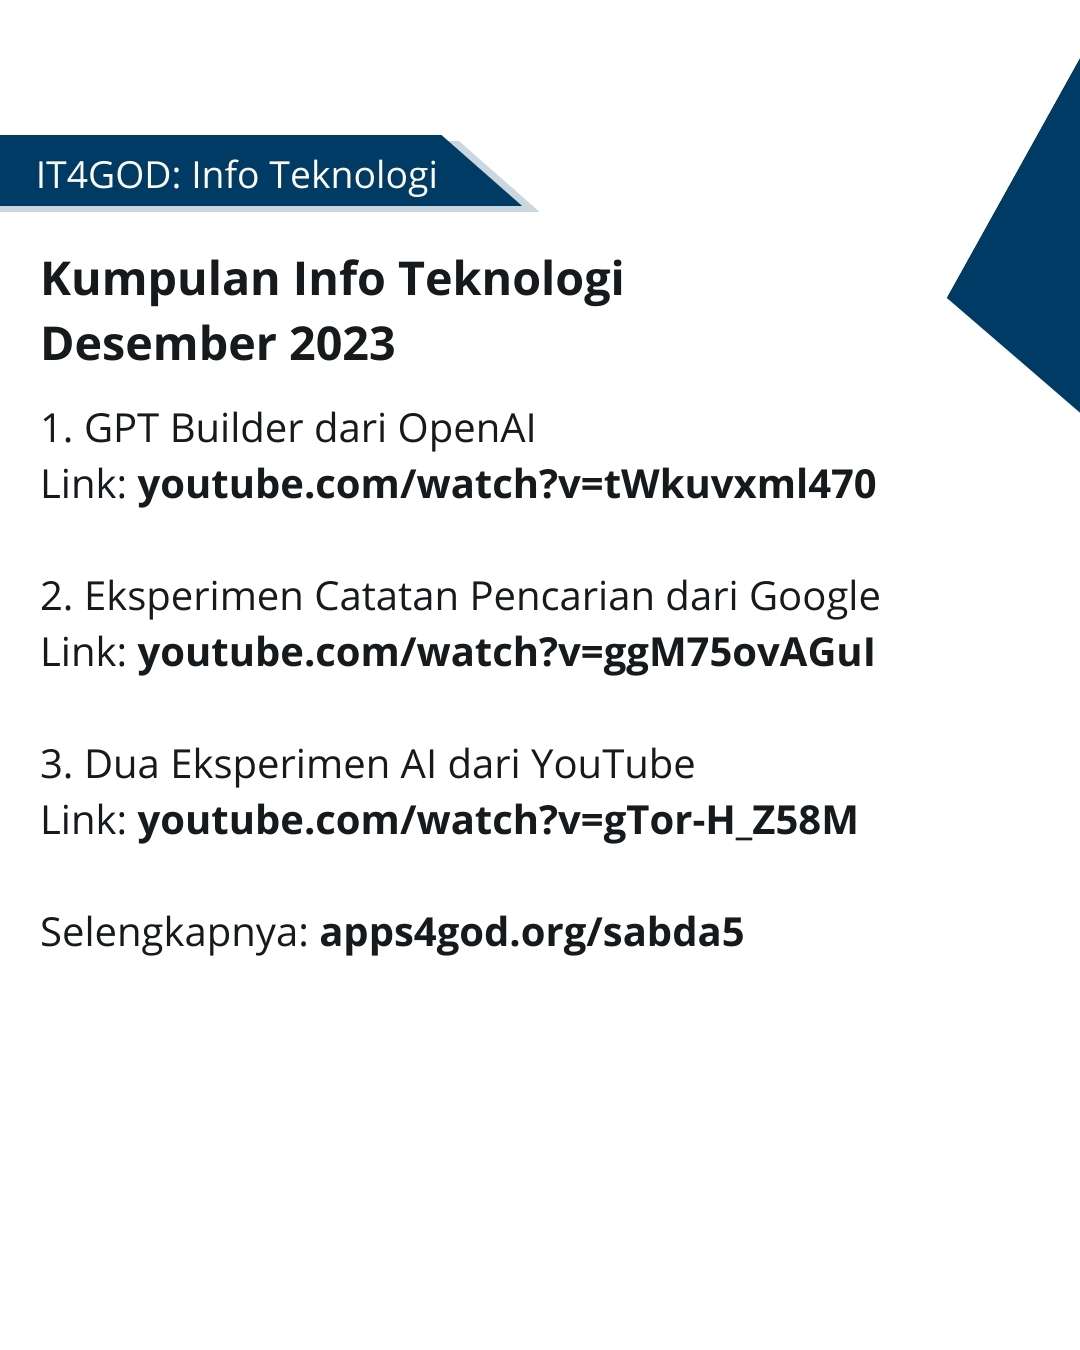 Info teknologi sepanjang Desember 2023.